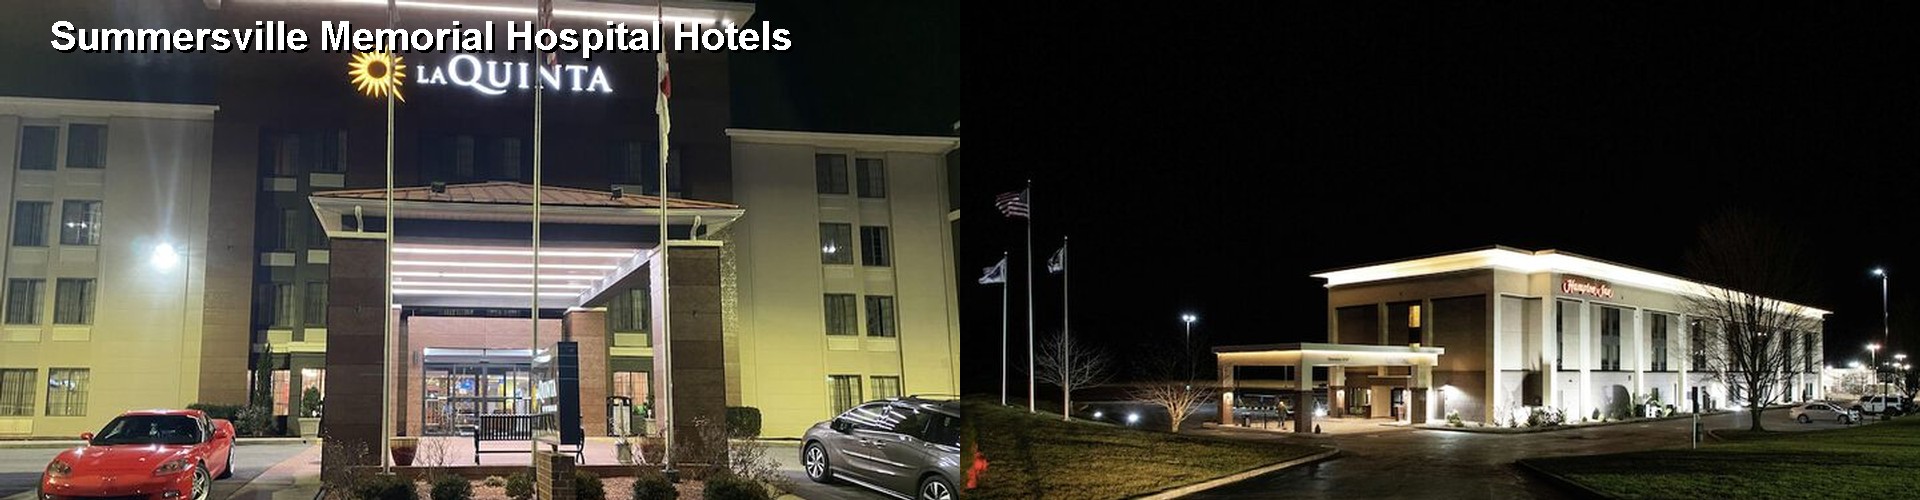 5 Best Hotels near Summersville Memorial Hospital